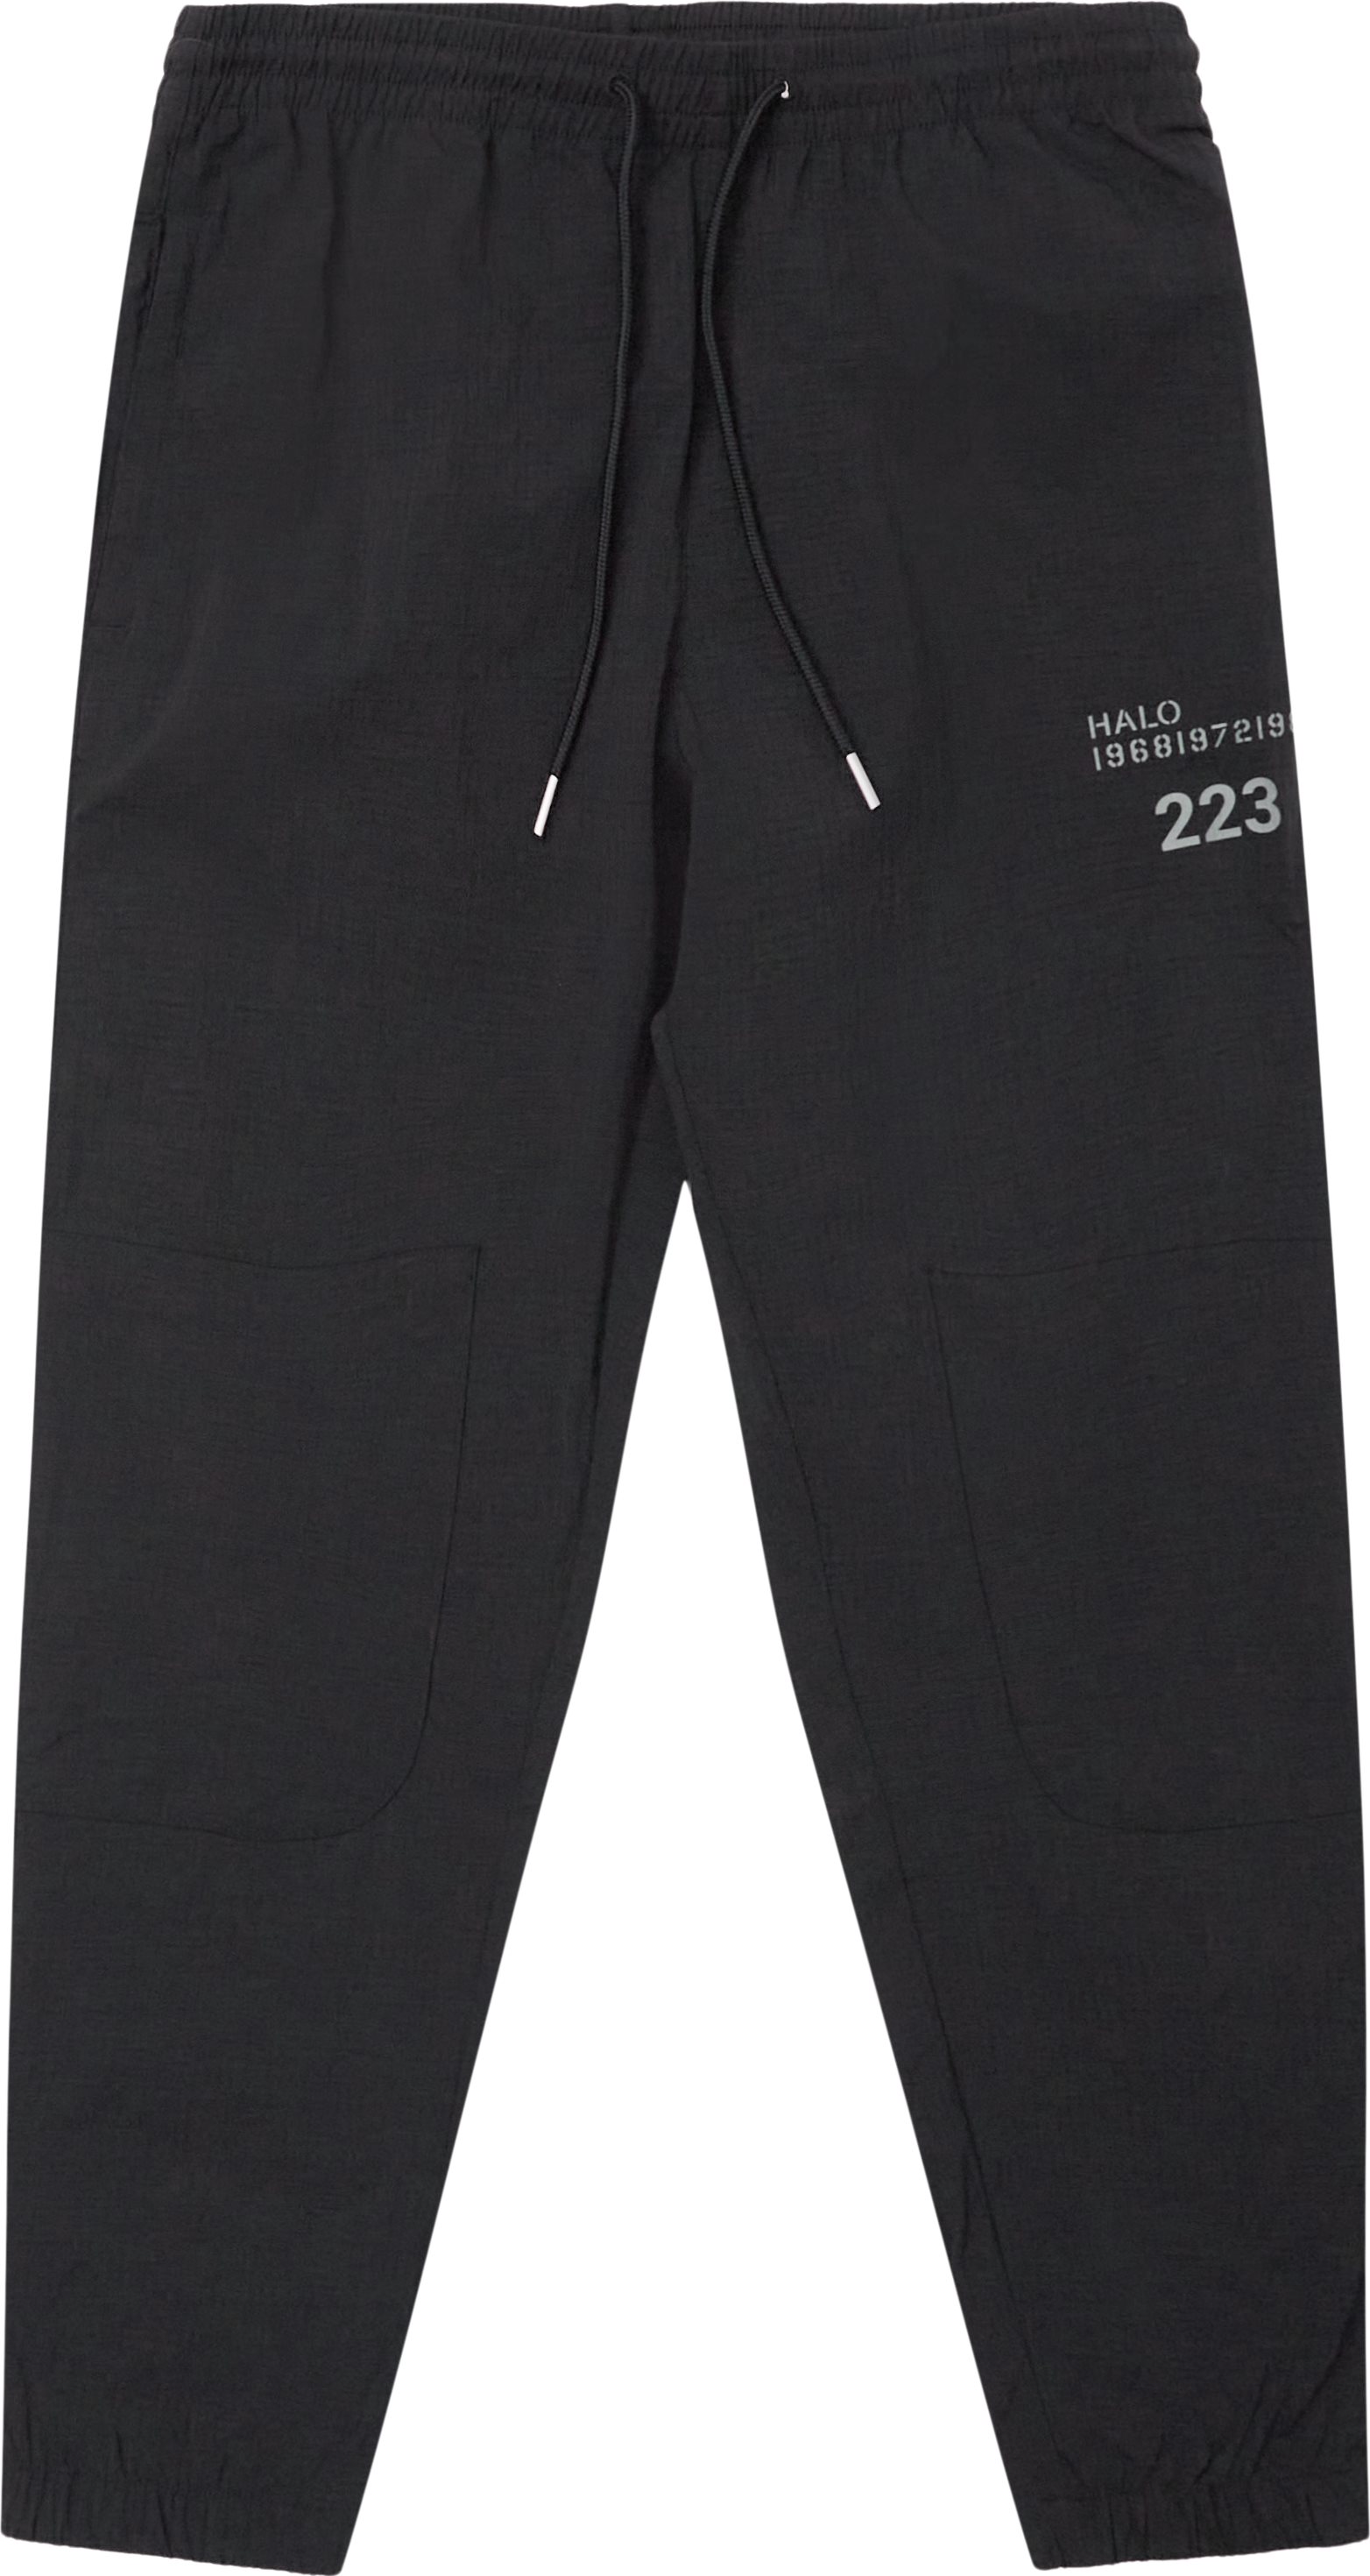 Field Pant - Trousers - Regular fit - Black